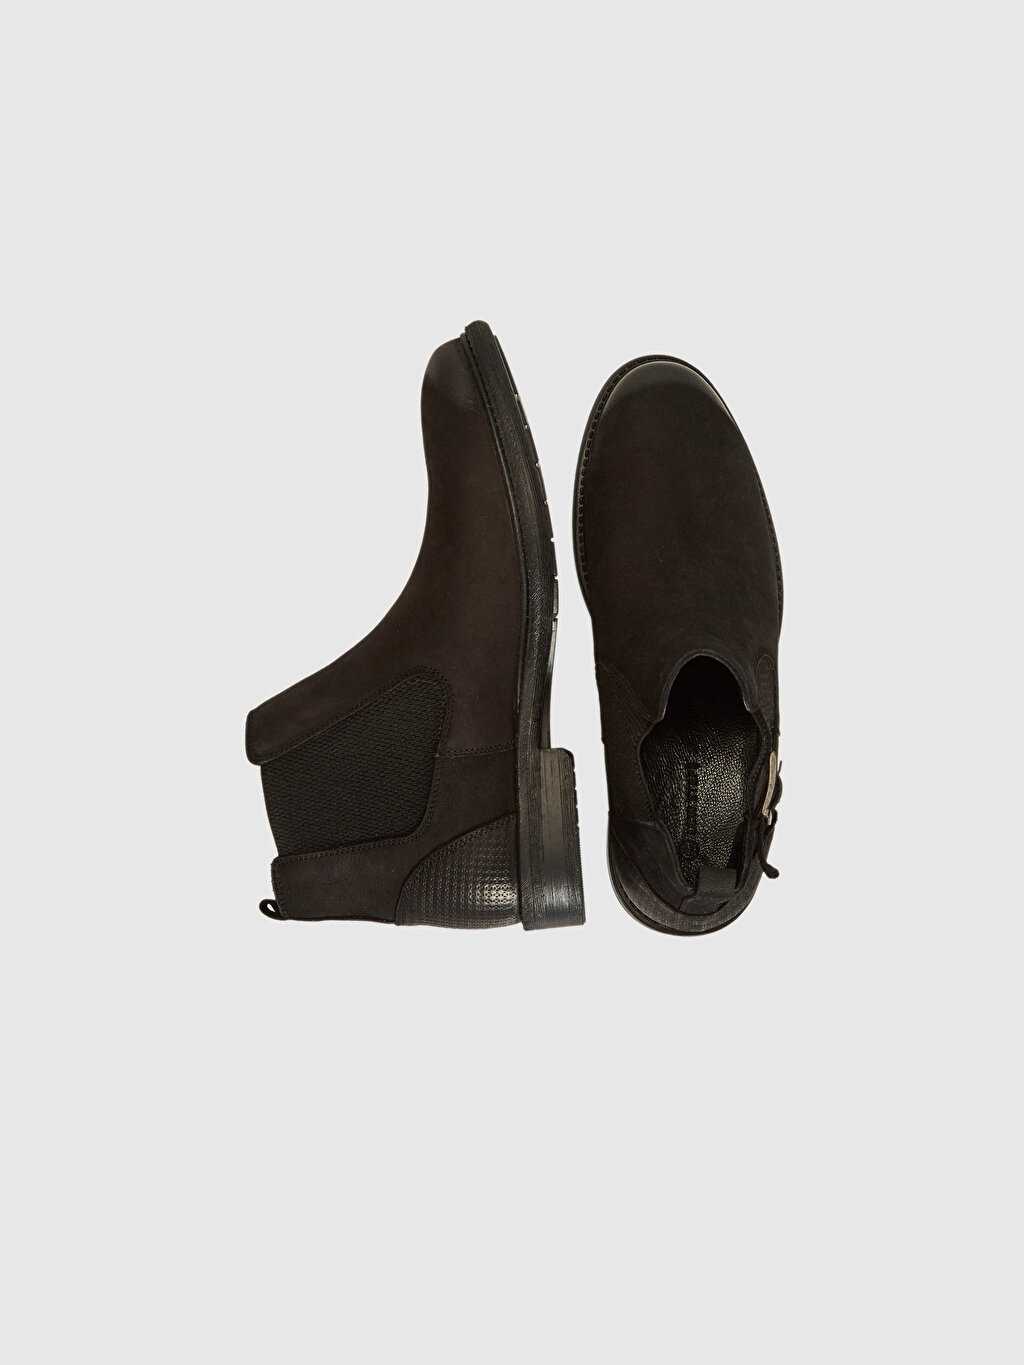 Genuine Leather Rubber Sides Men's Boots -0WBS40Z8-HUC - 0WBS40Z8-HUC - Waikiki